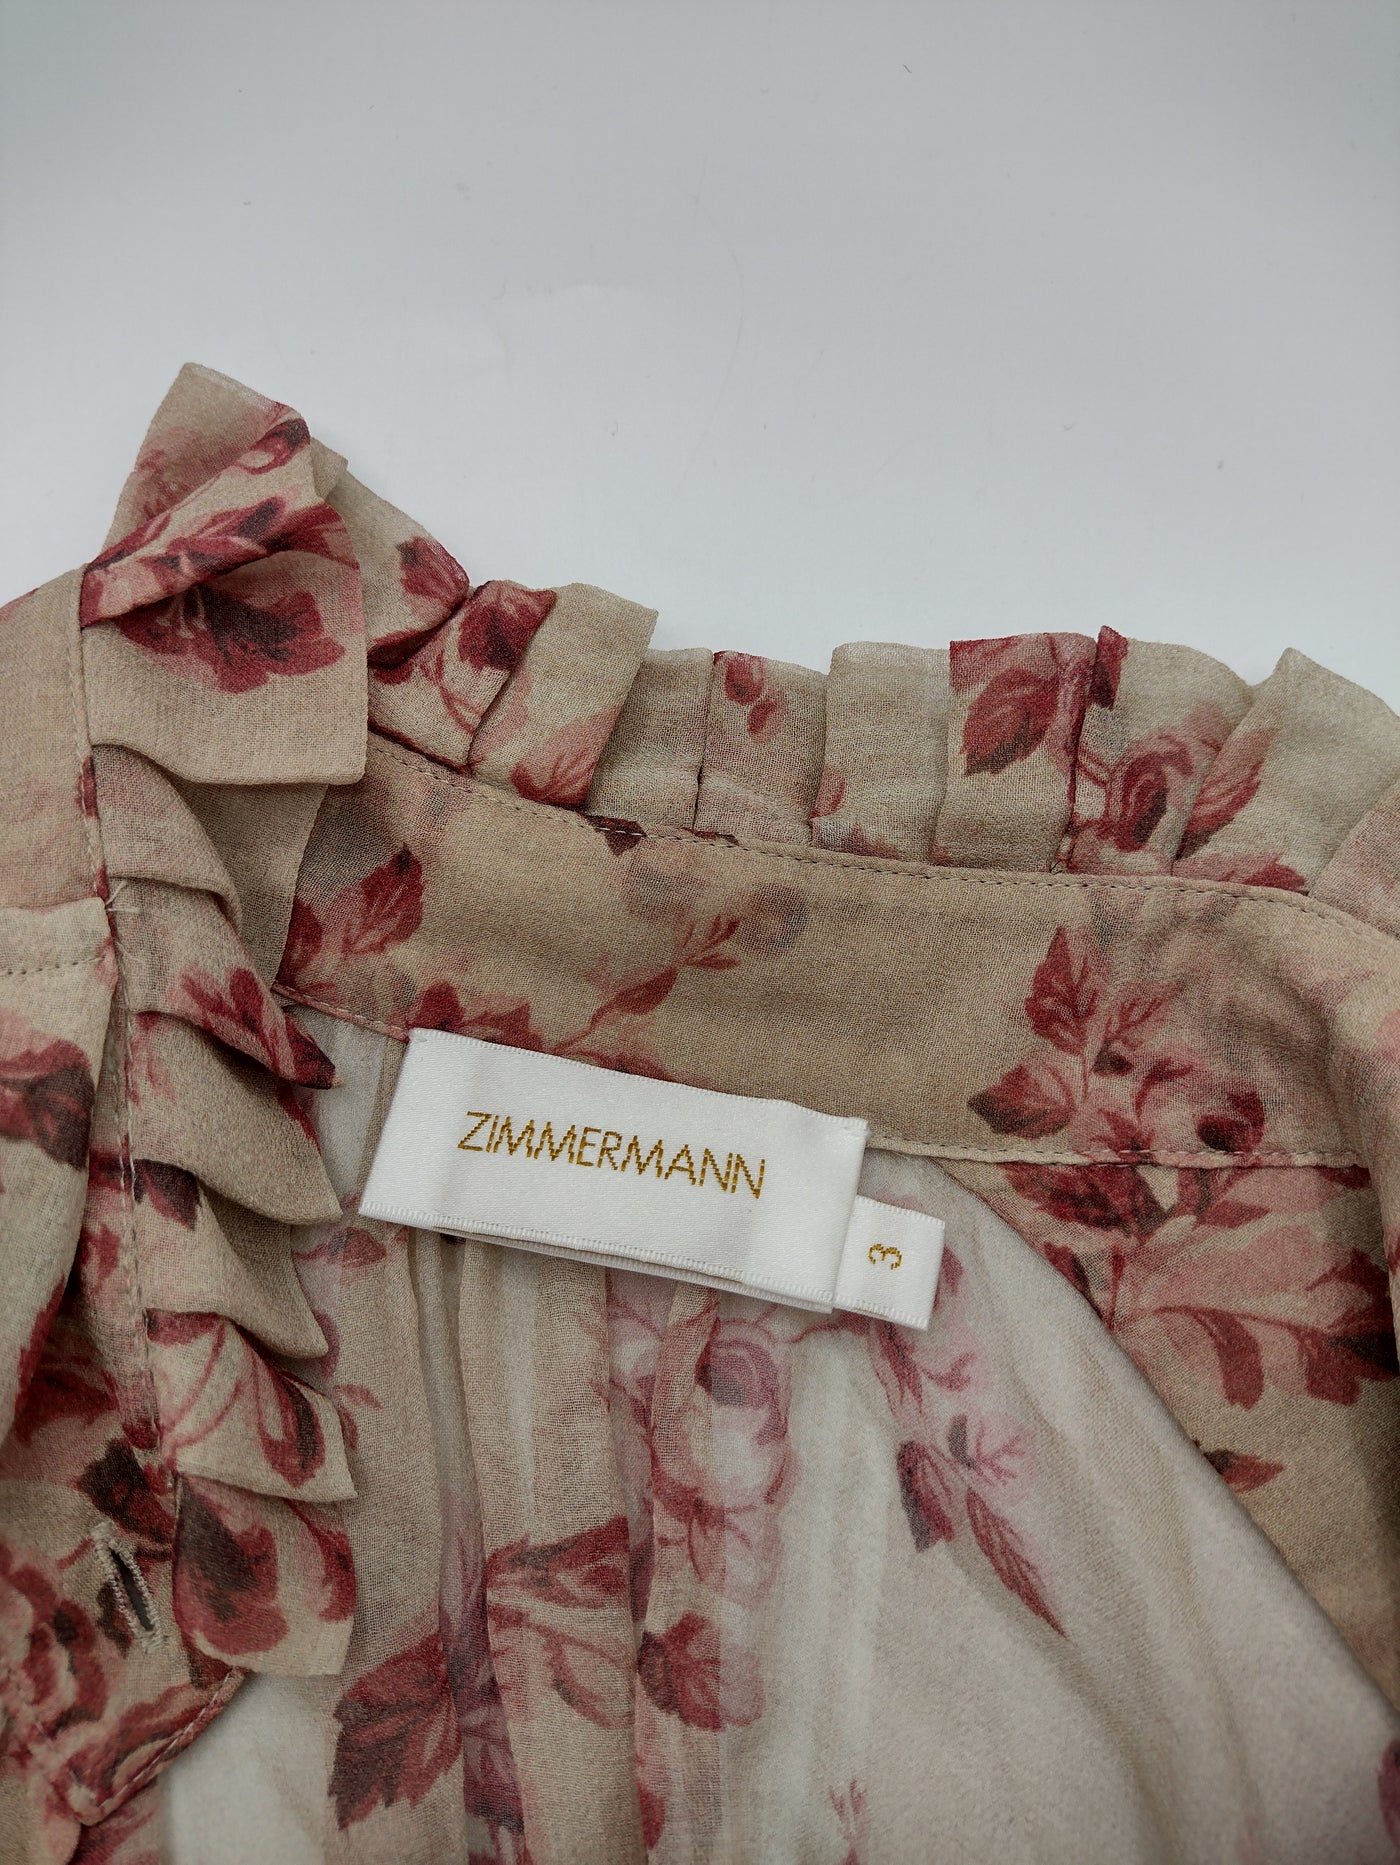 Zimmermann unbridled tie neck dress size 3/L